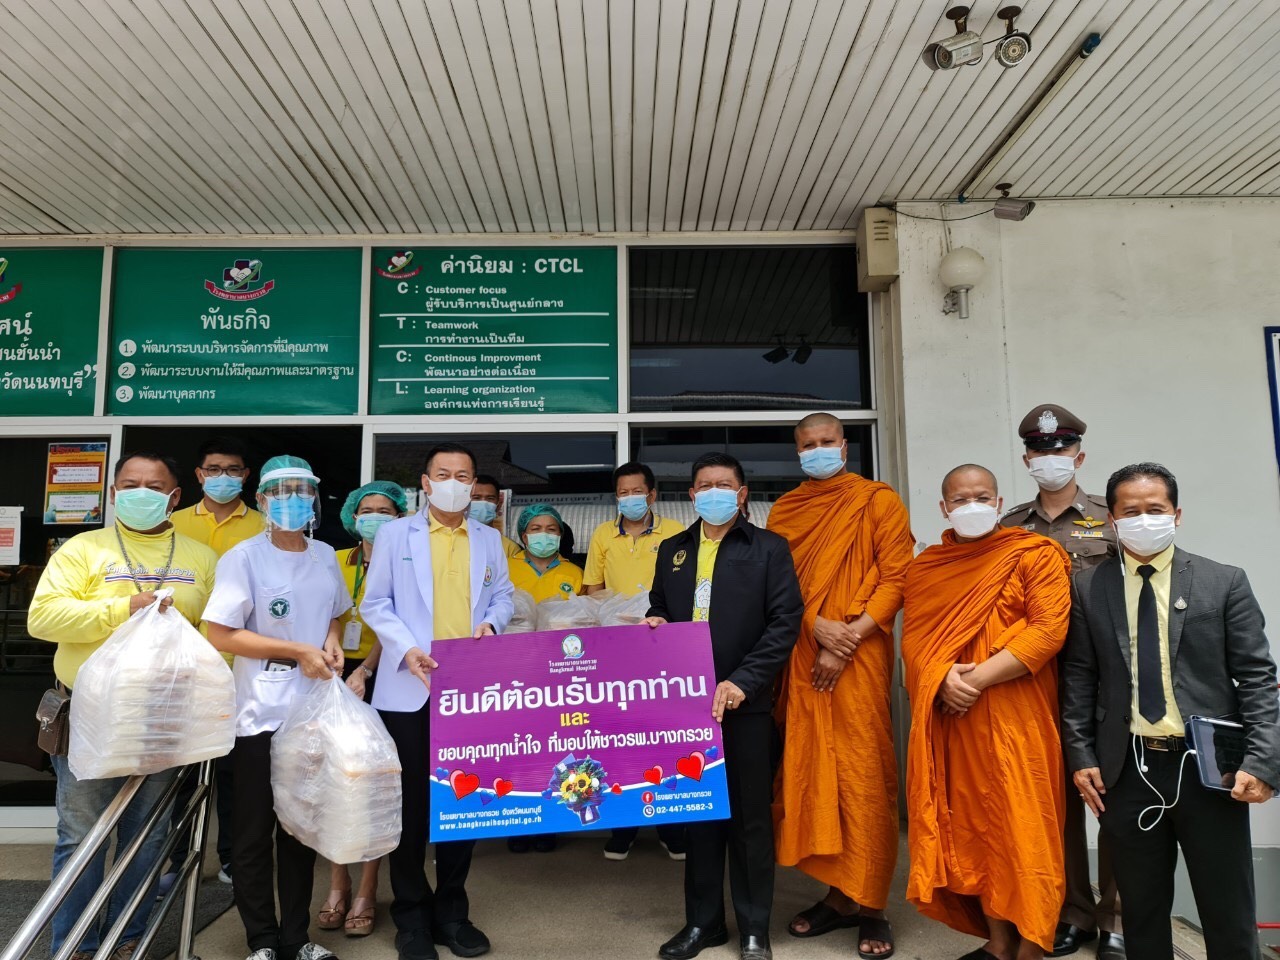 26 April 2021, at Bangkruai Hospital, Bangkruai District, Nonthaburi Province